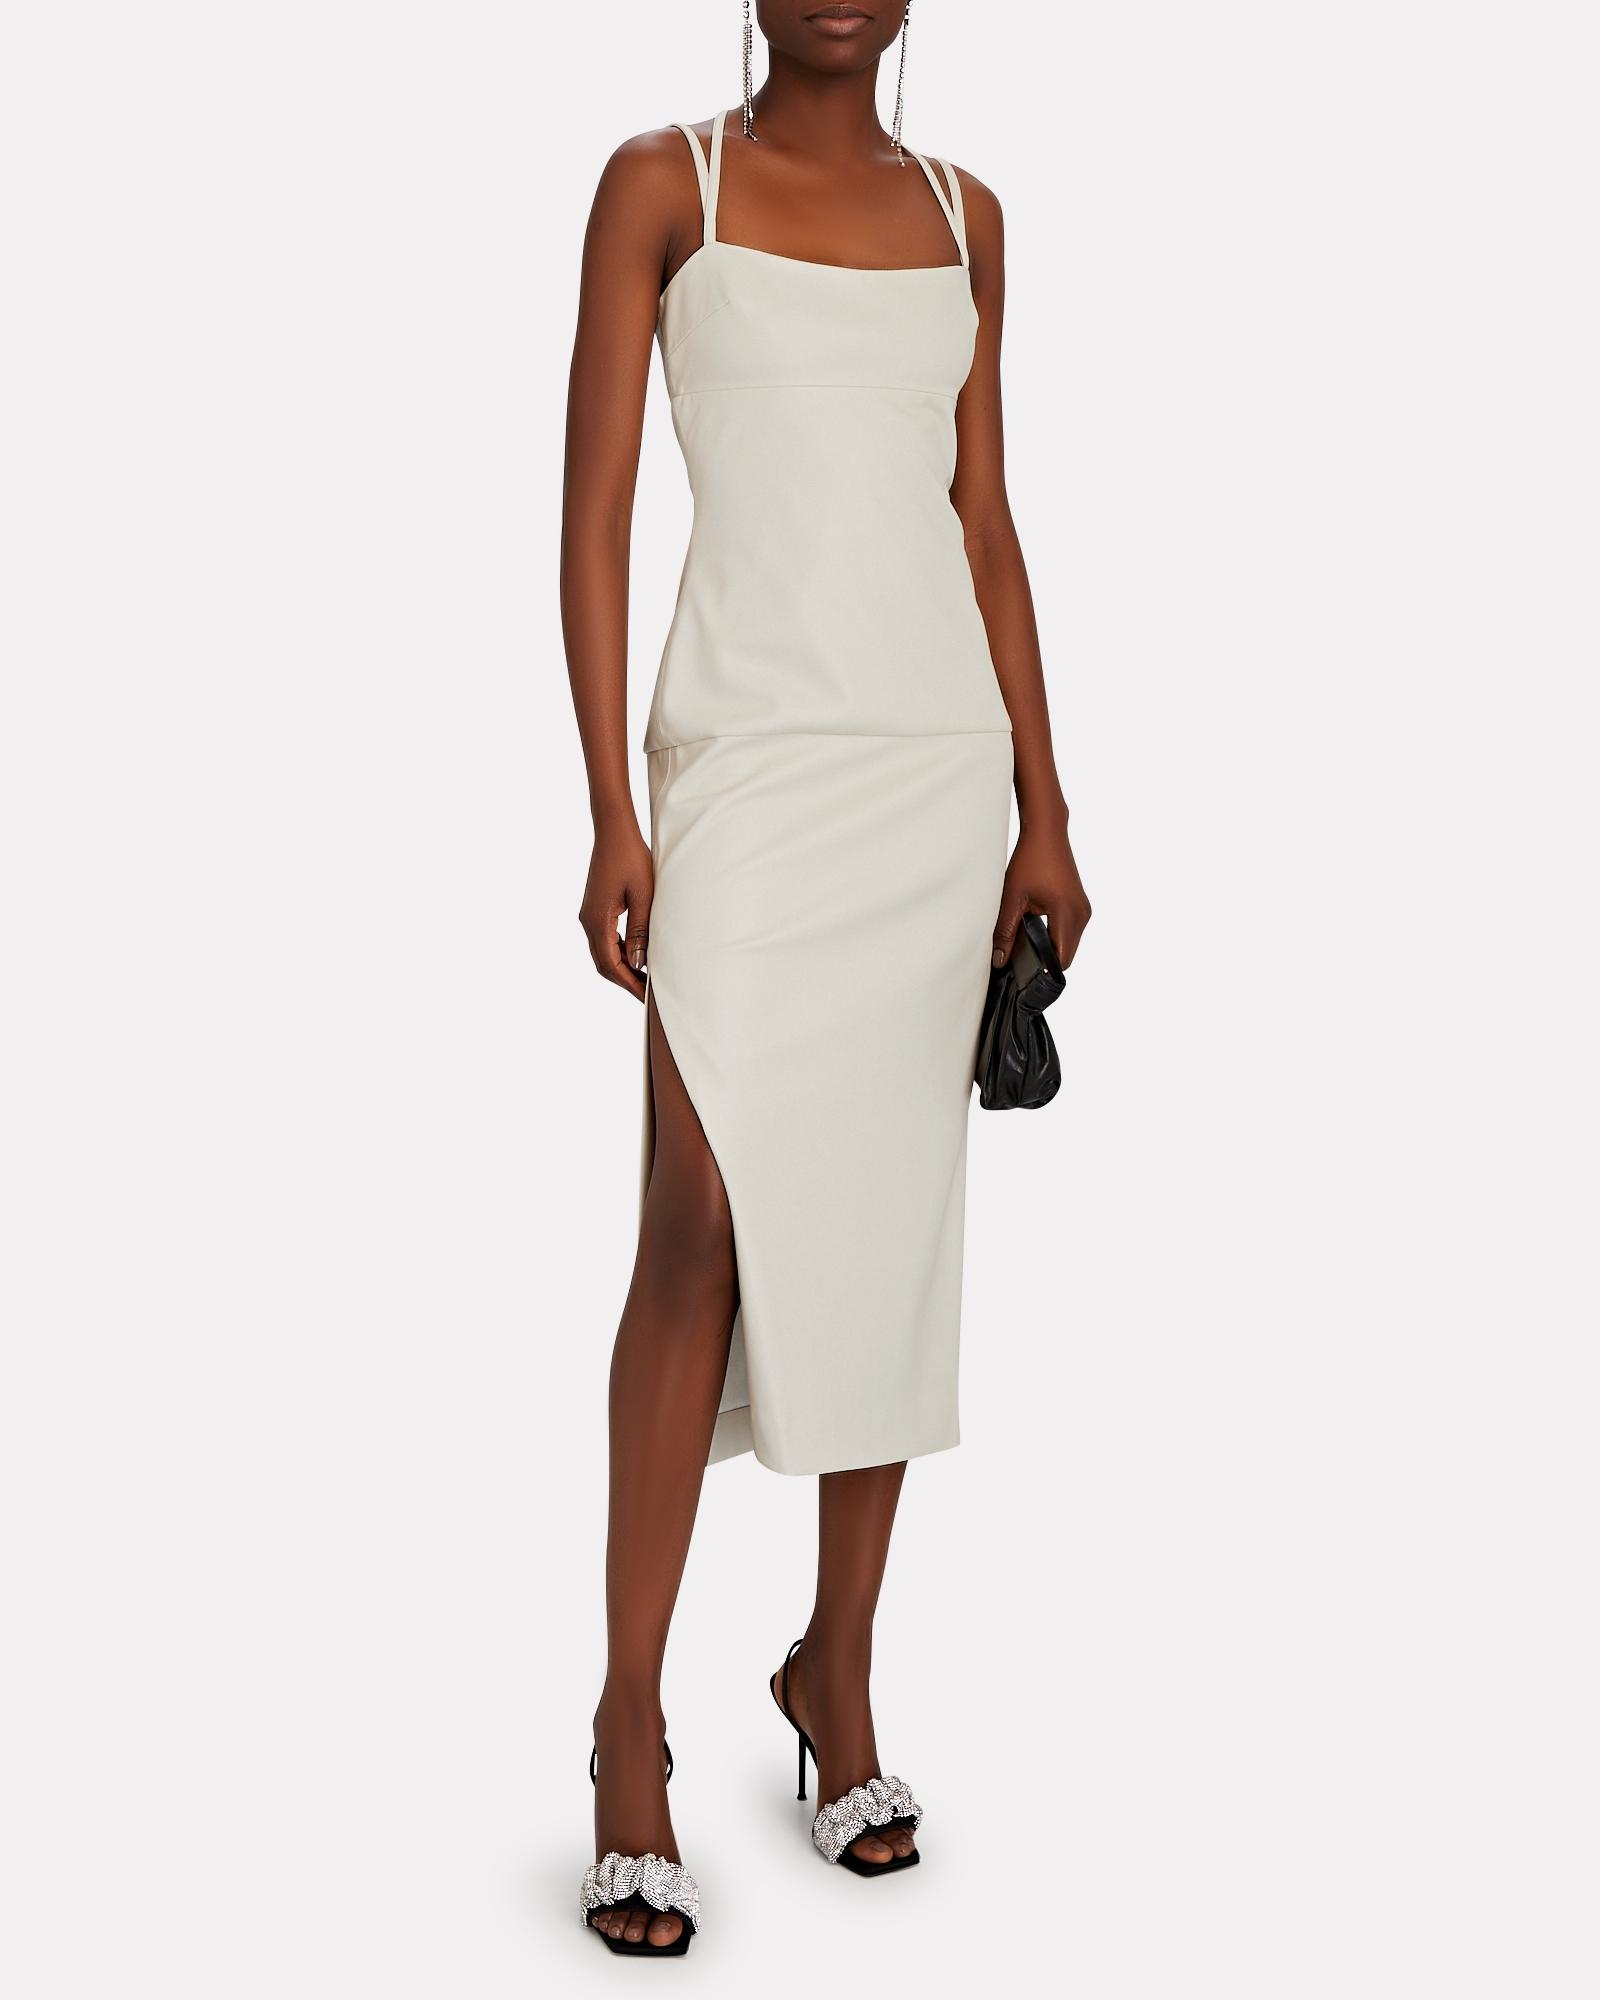 Alexis Jacqueline Vegan Leather Midi Dress in Ivory (White) - Lyst